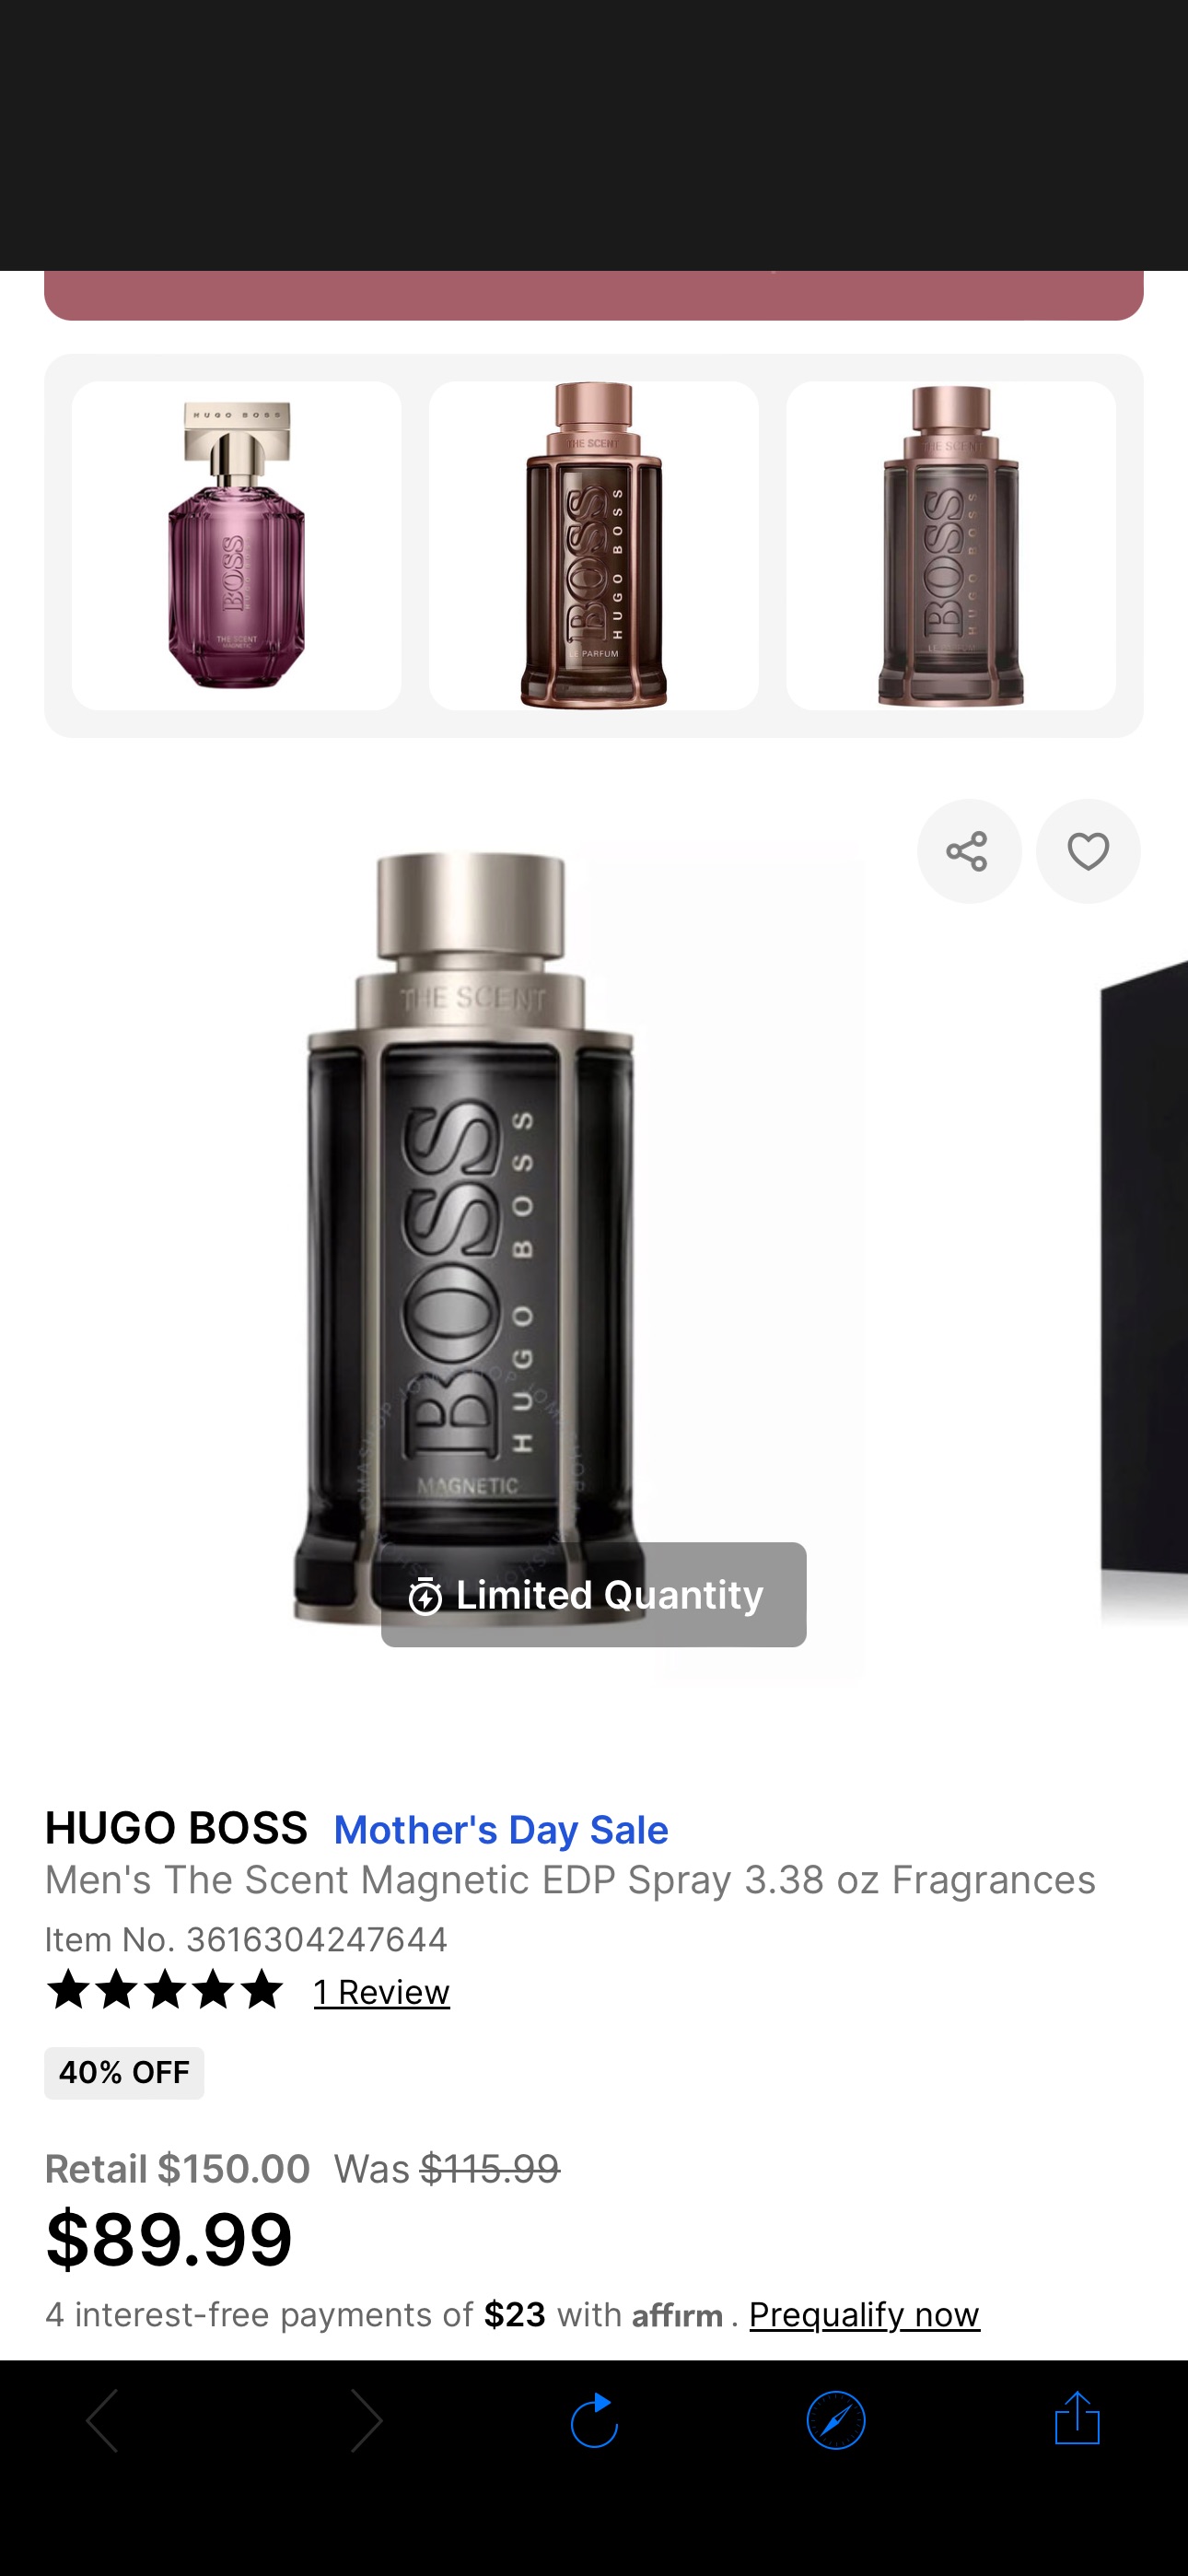 Hugo Boss Men's The Scent Magnetic EDP Spray 3.38 oz Fragrances 3616304247644 - Fragrances & Beauty, The Scent Magnetic - Jomashop